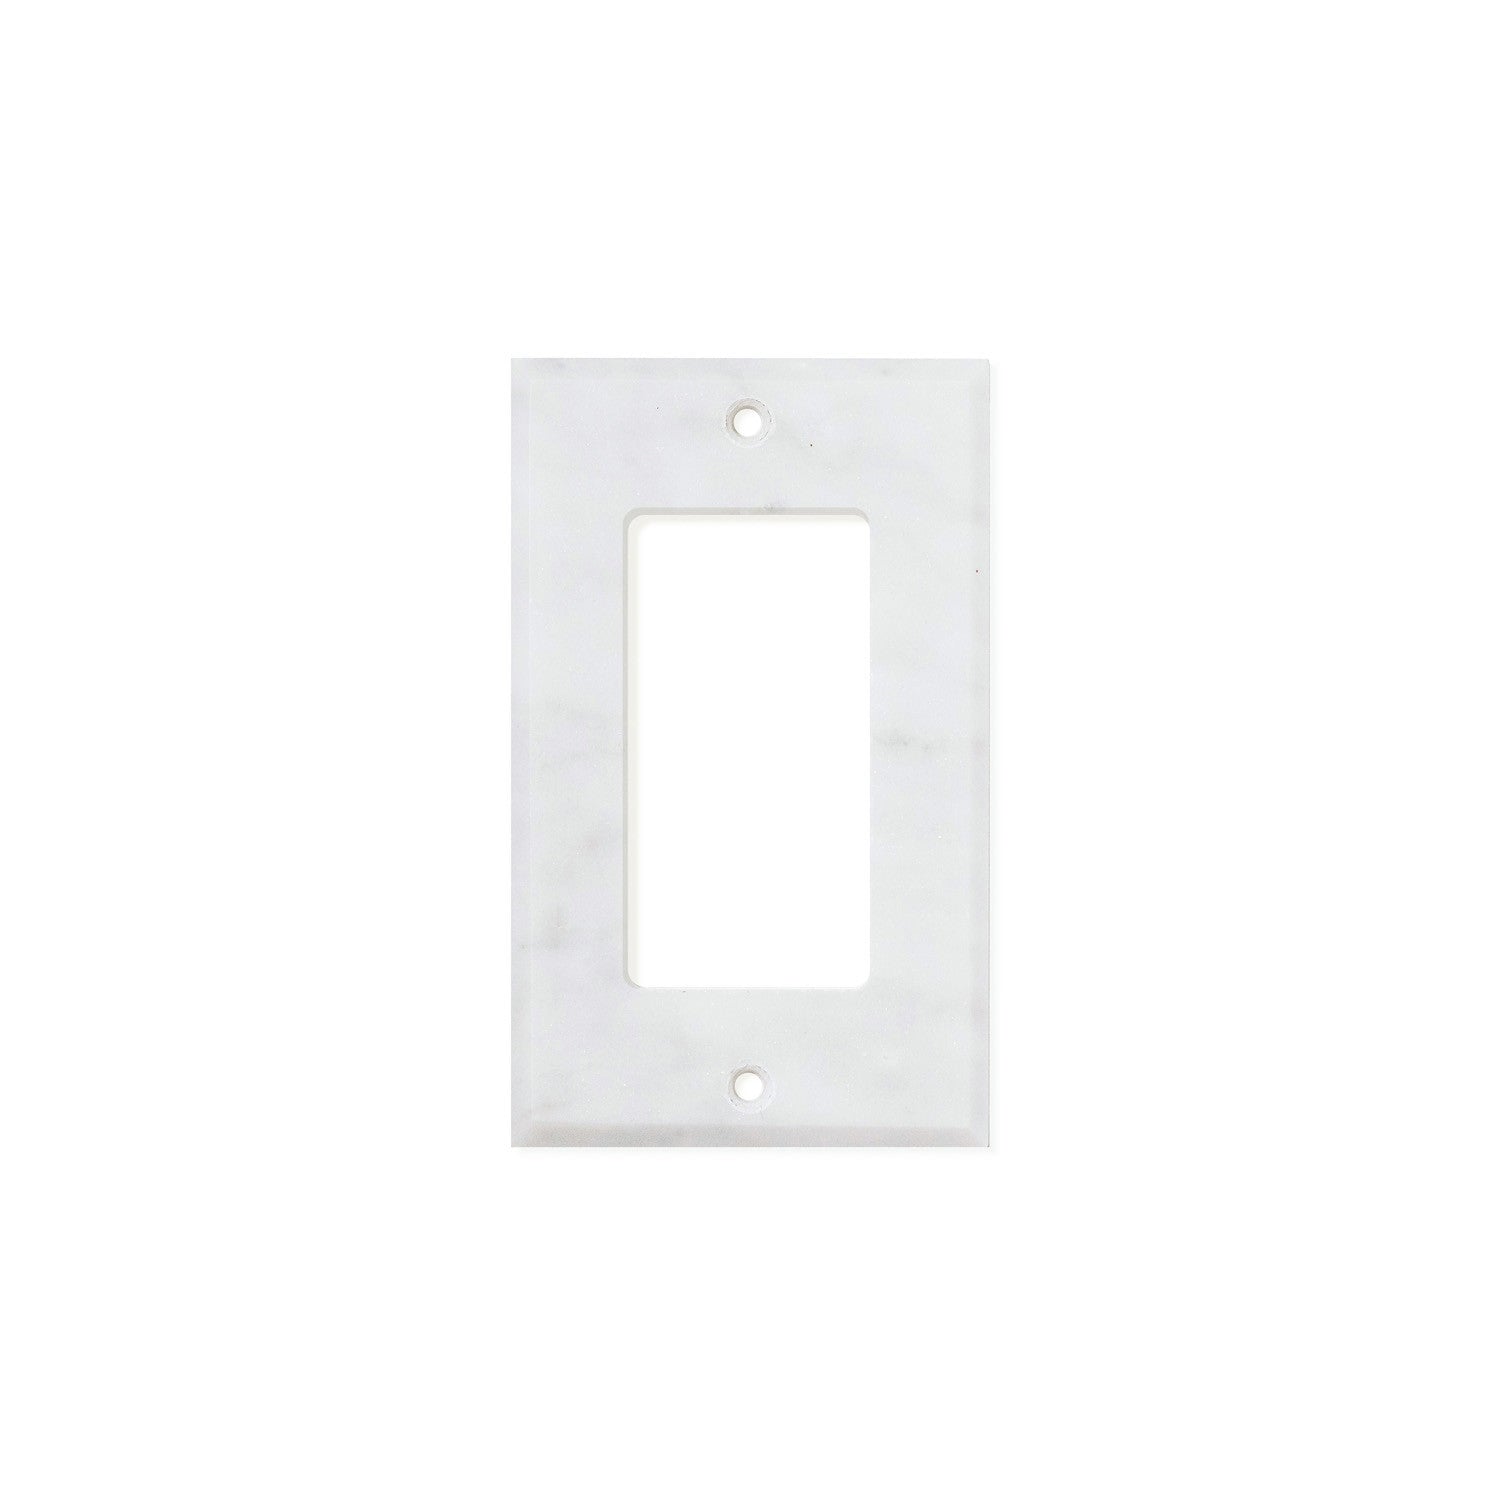 Bianco Carrara (Carrara White) Marble Switch Plate Cover, Polished (SINGLE ROCKER) - Tilephile